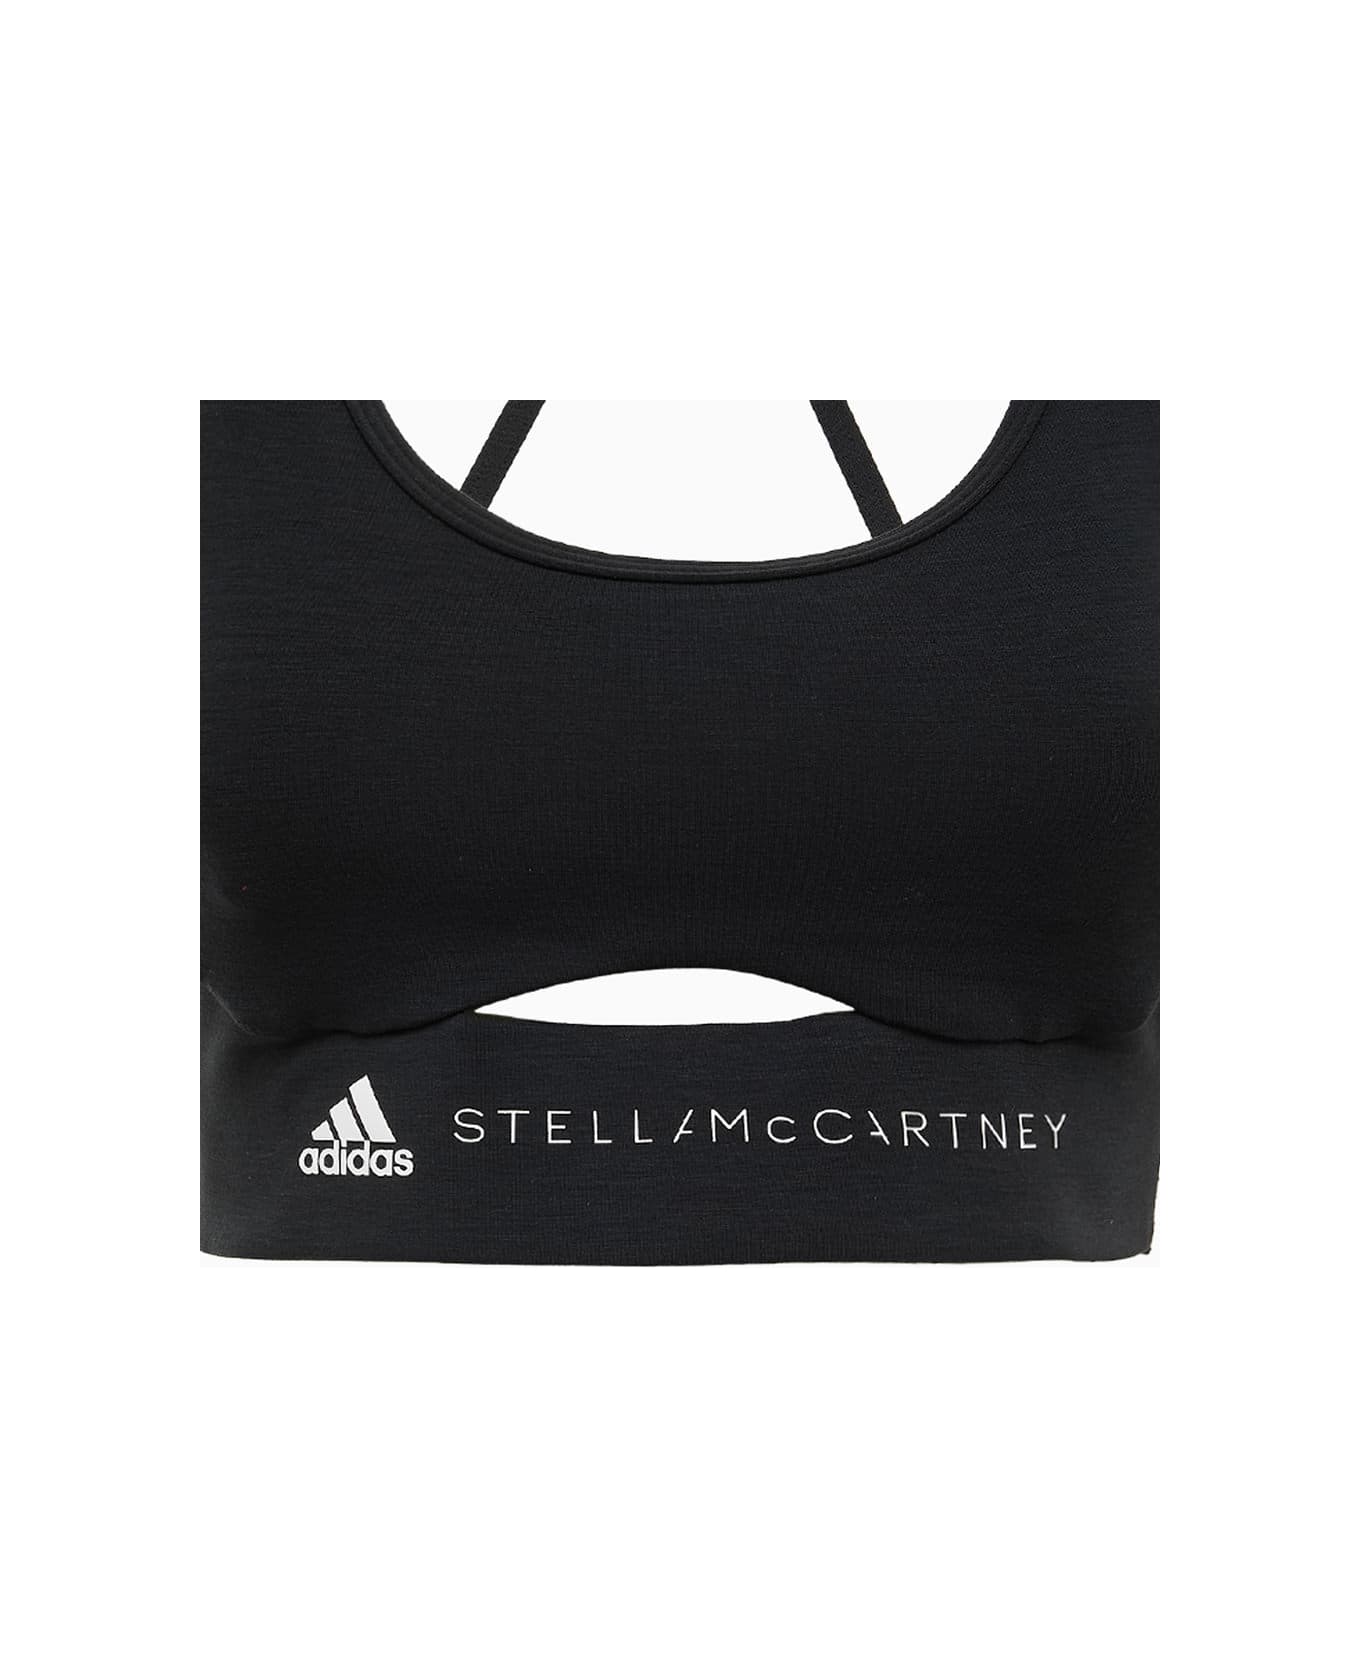 Adidas by Stella McCartney Truestrength Yoga Medium Support Sports Bra - BLACK/WHITE トップス